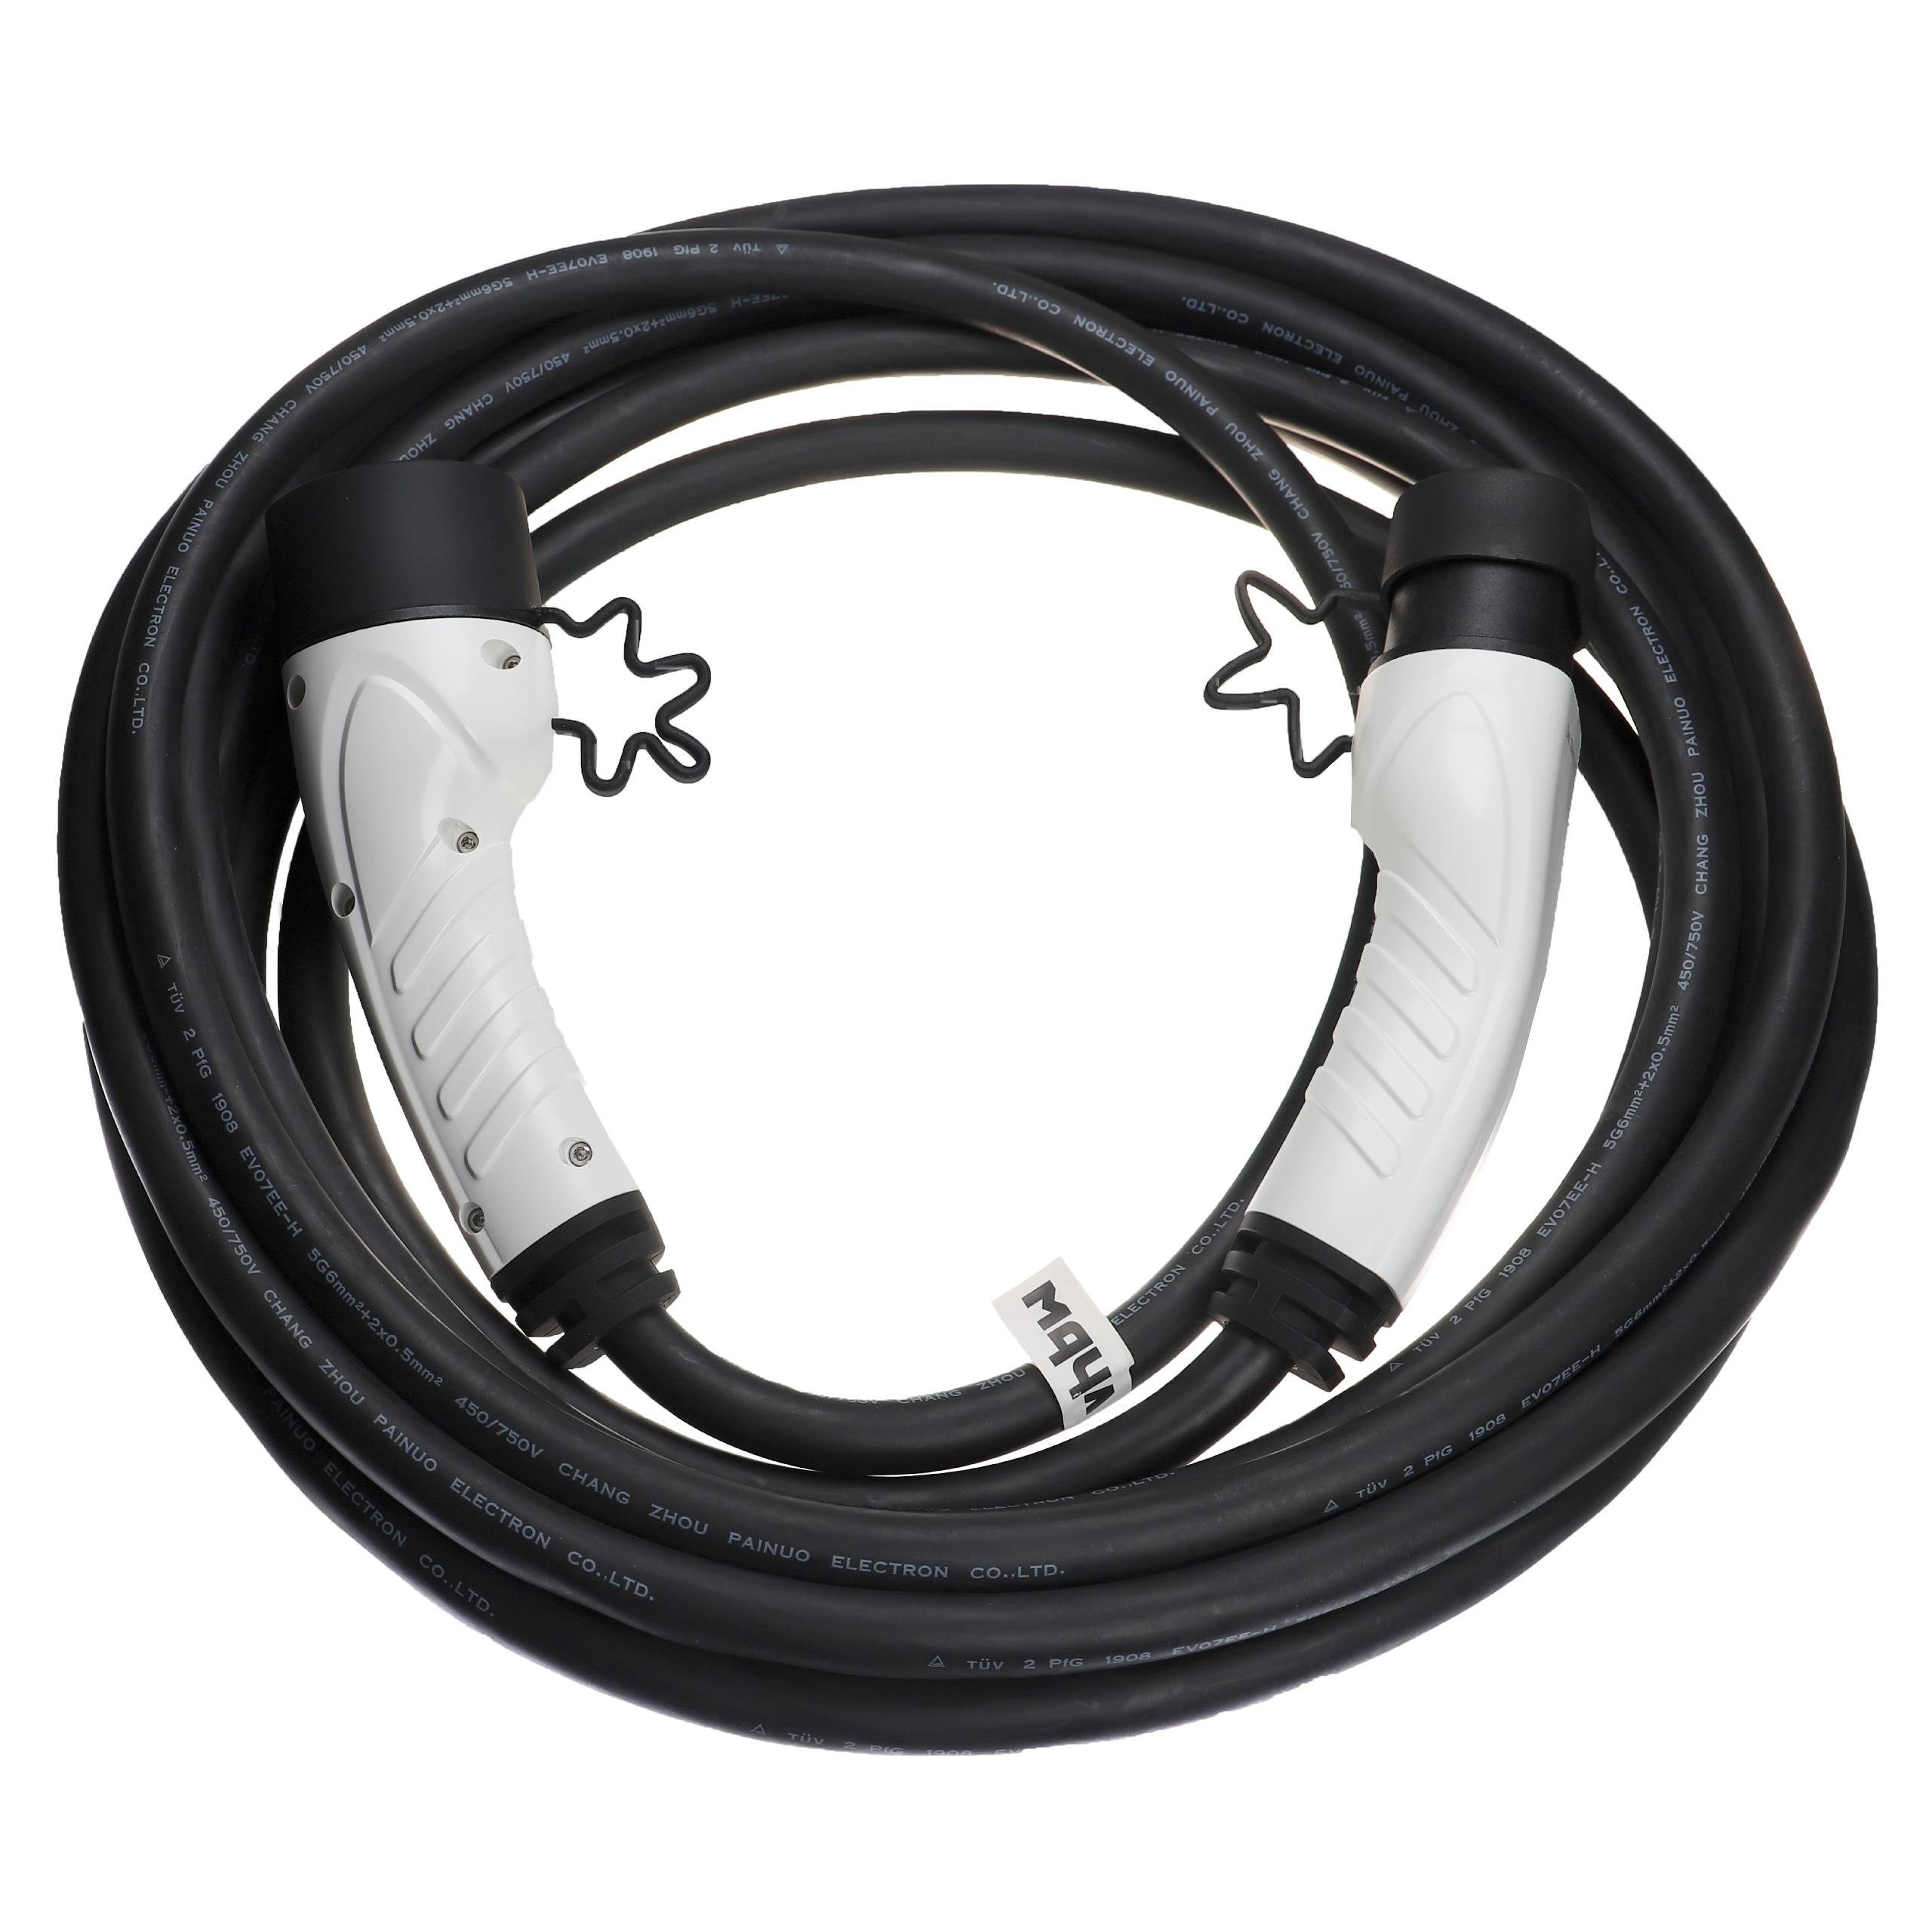 vhbw passend für Seat Tarraco PHEV Elektroauto / Plug-in-Hybrid Elektro-Kabel